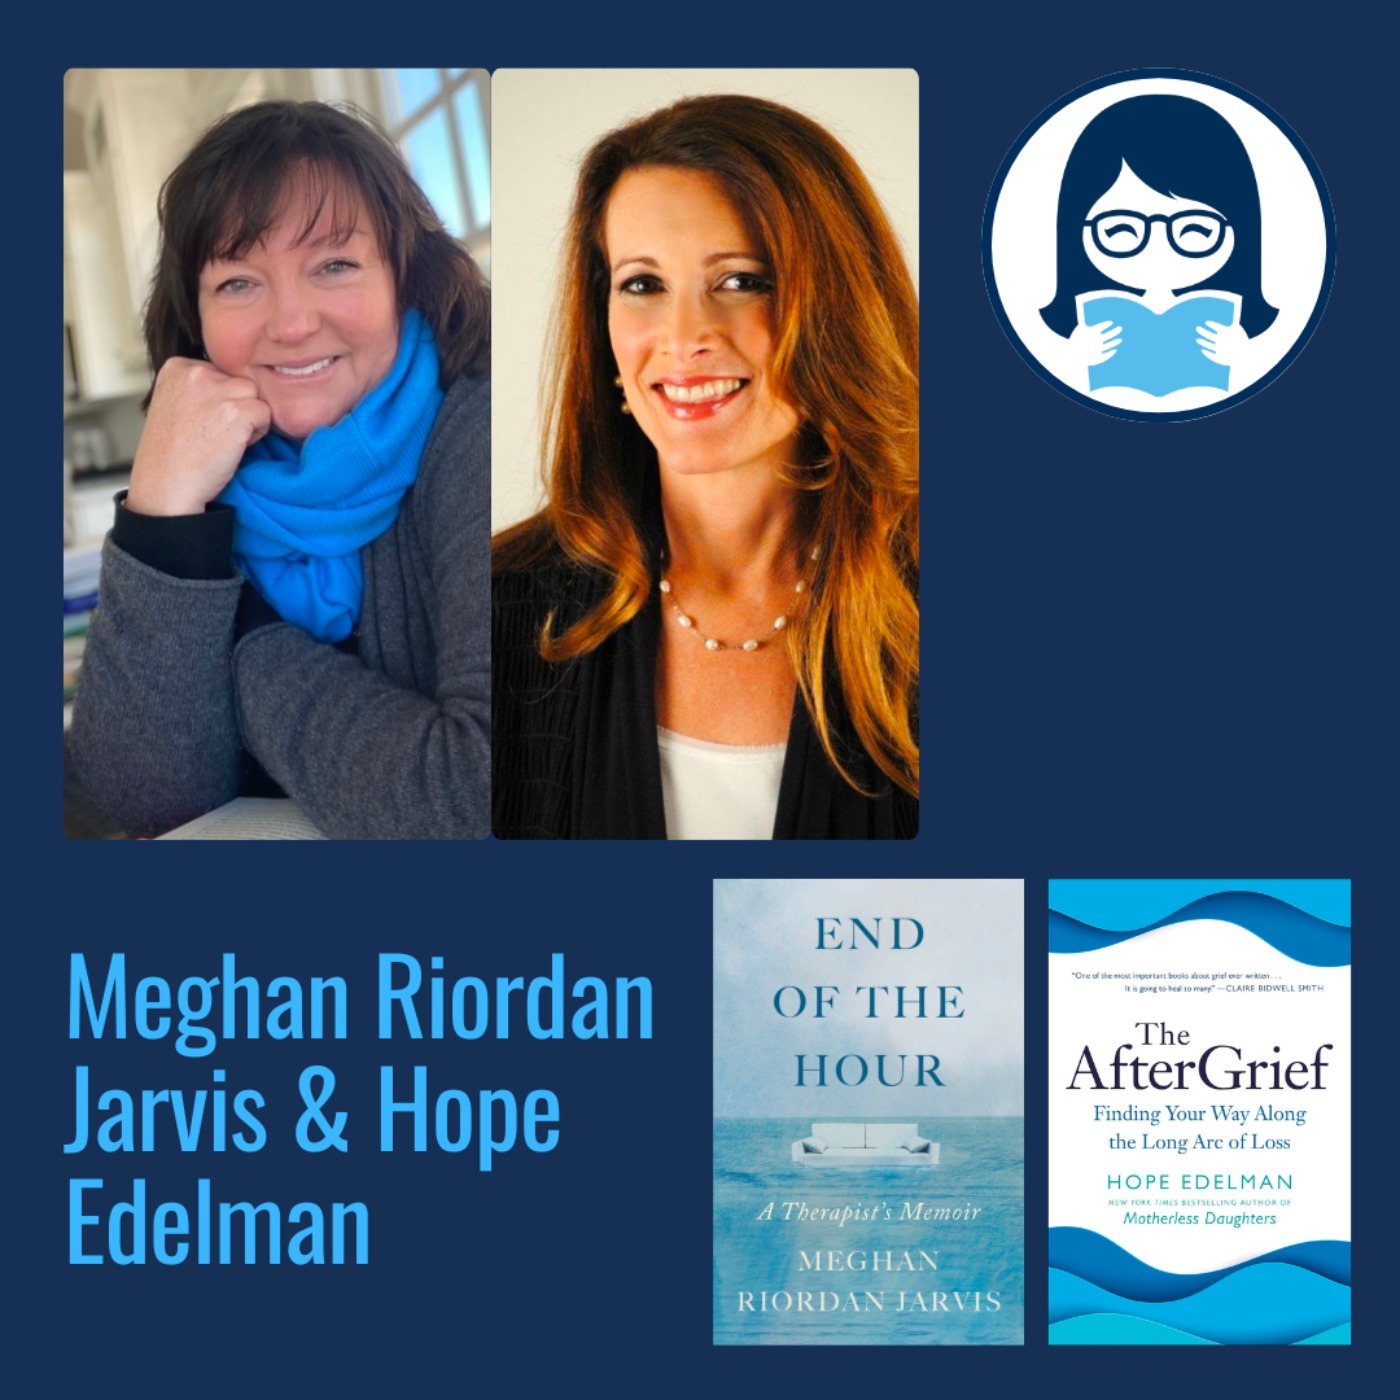 Meghan Riordan Jarvis and Hope Edelman at Zibby's Bookshop